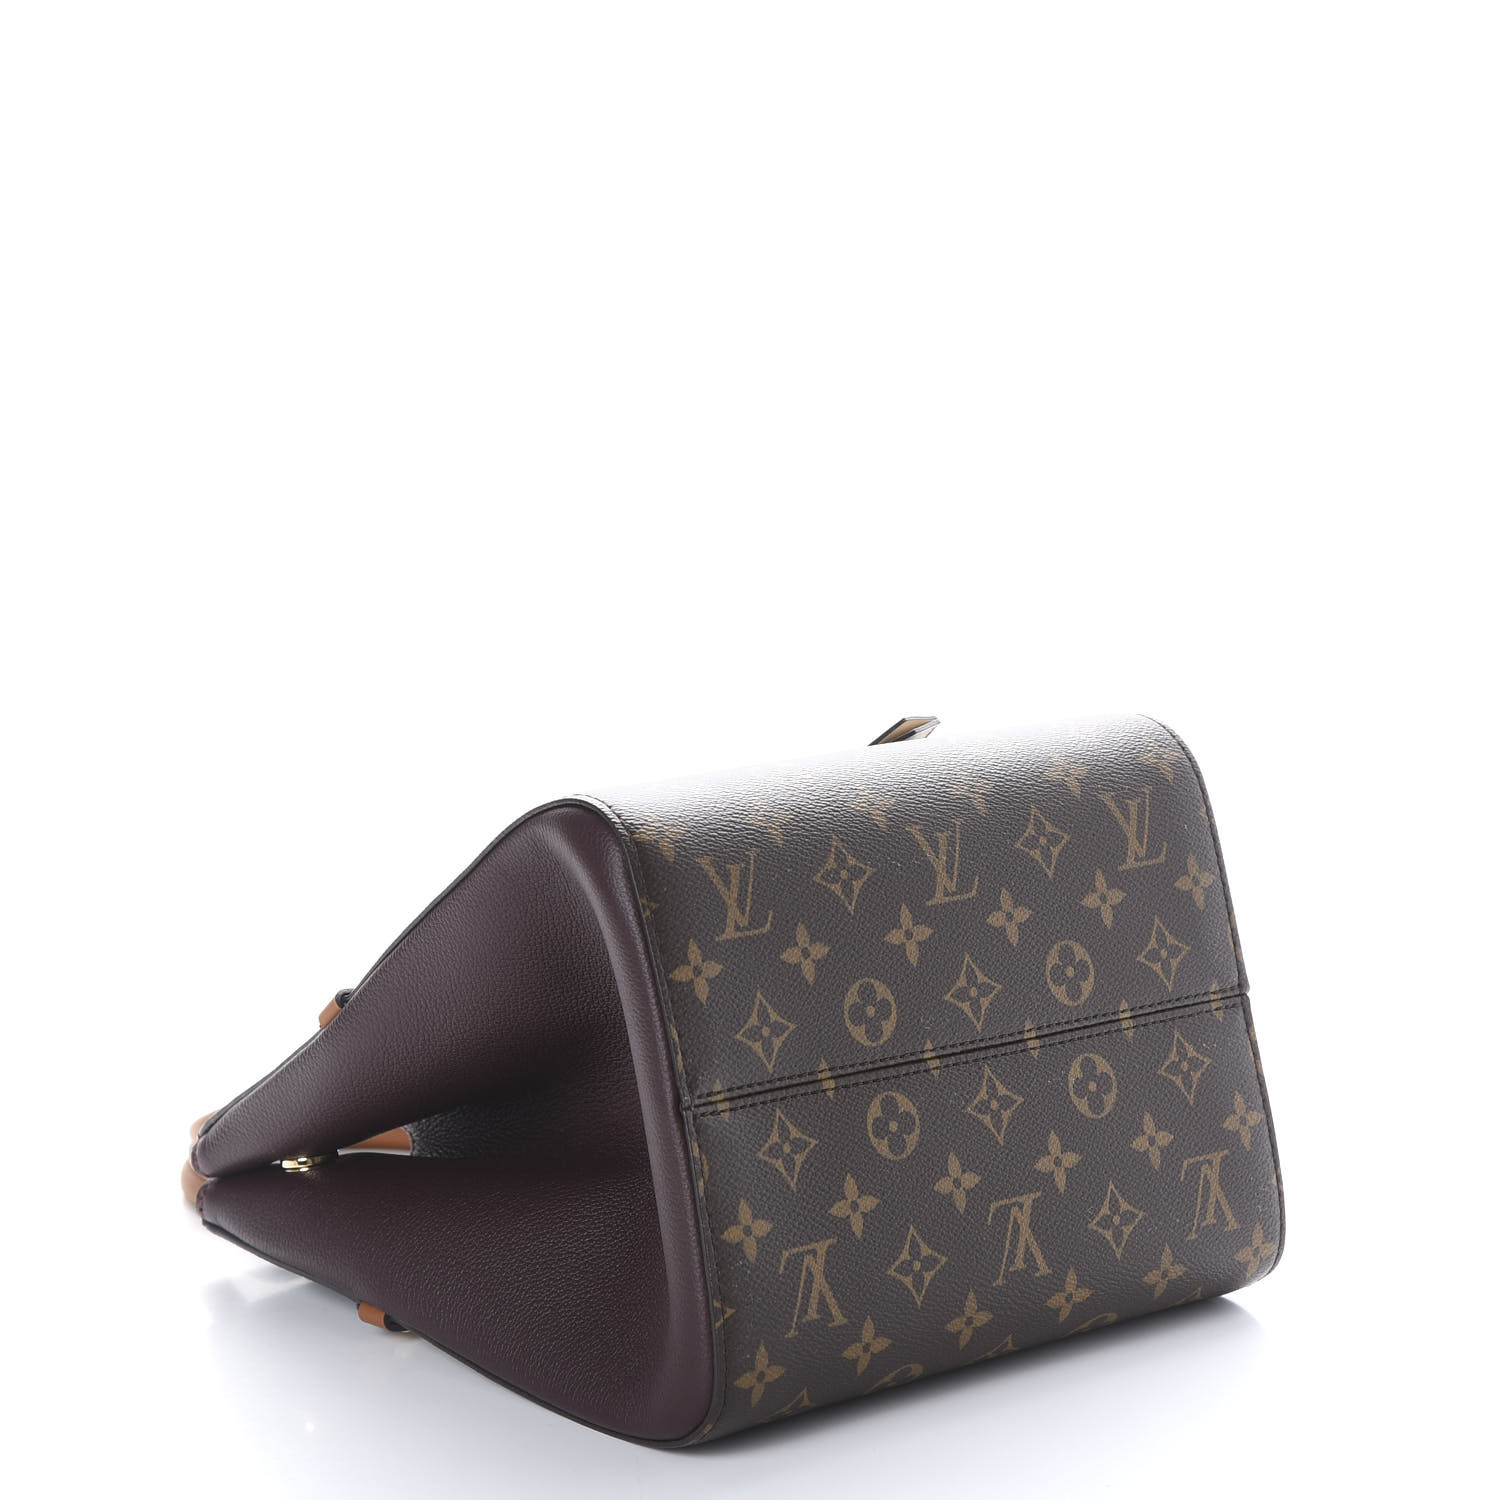 Louis Vuitton Monogram Essential Cap - For Sale on 1stDibs